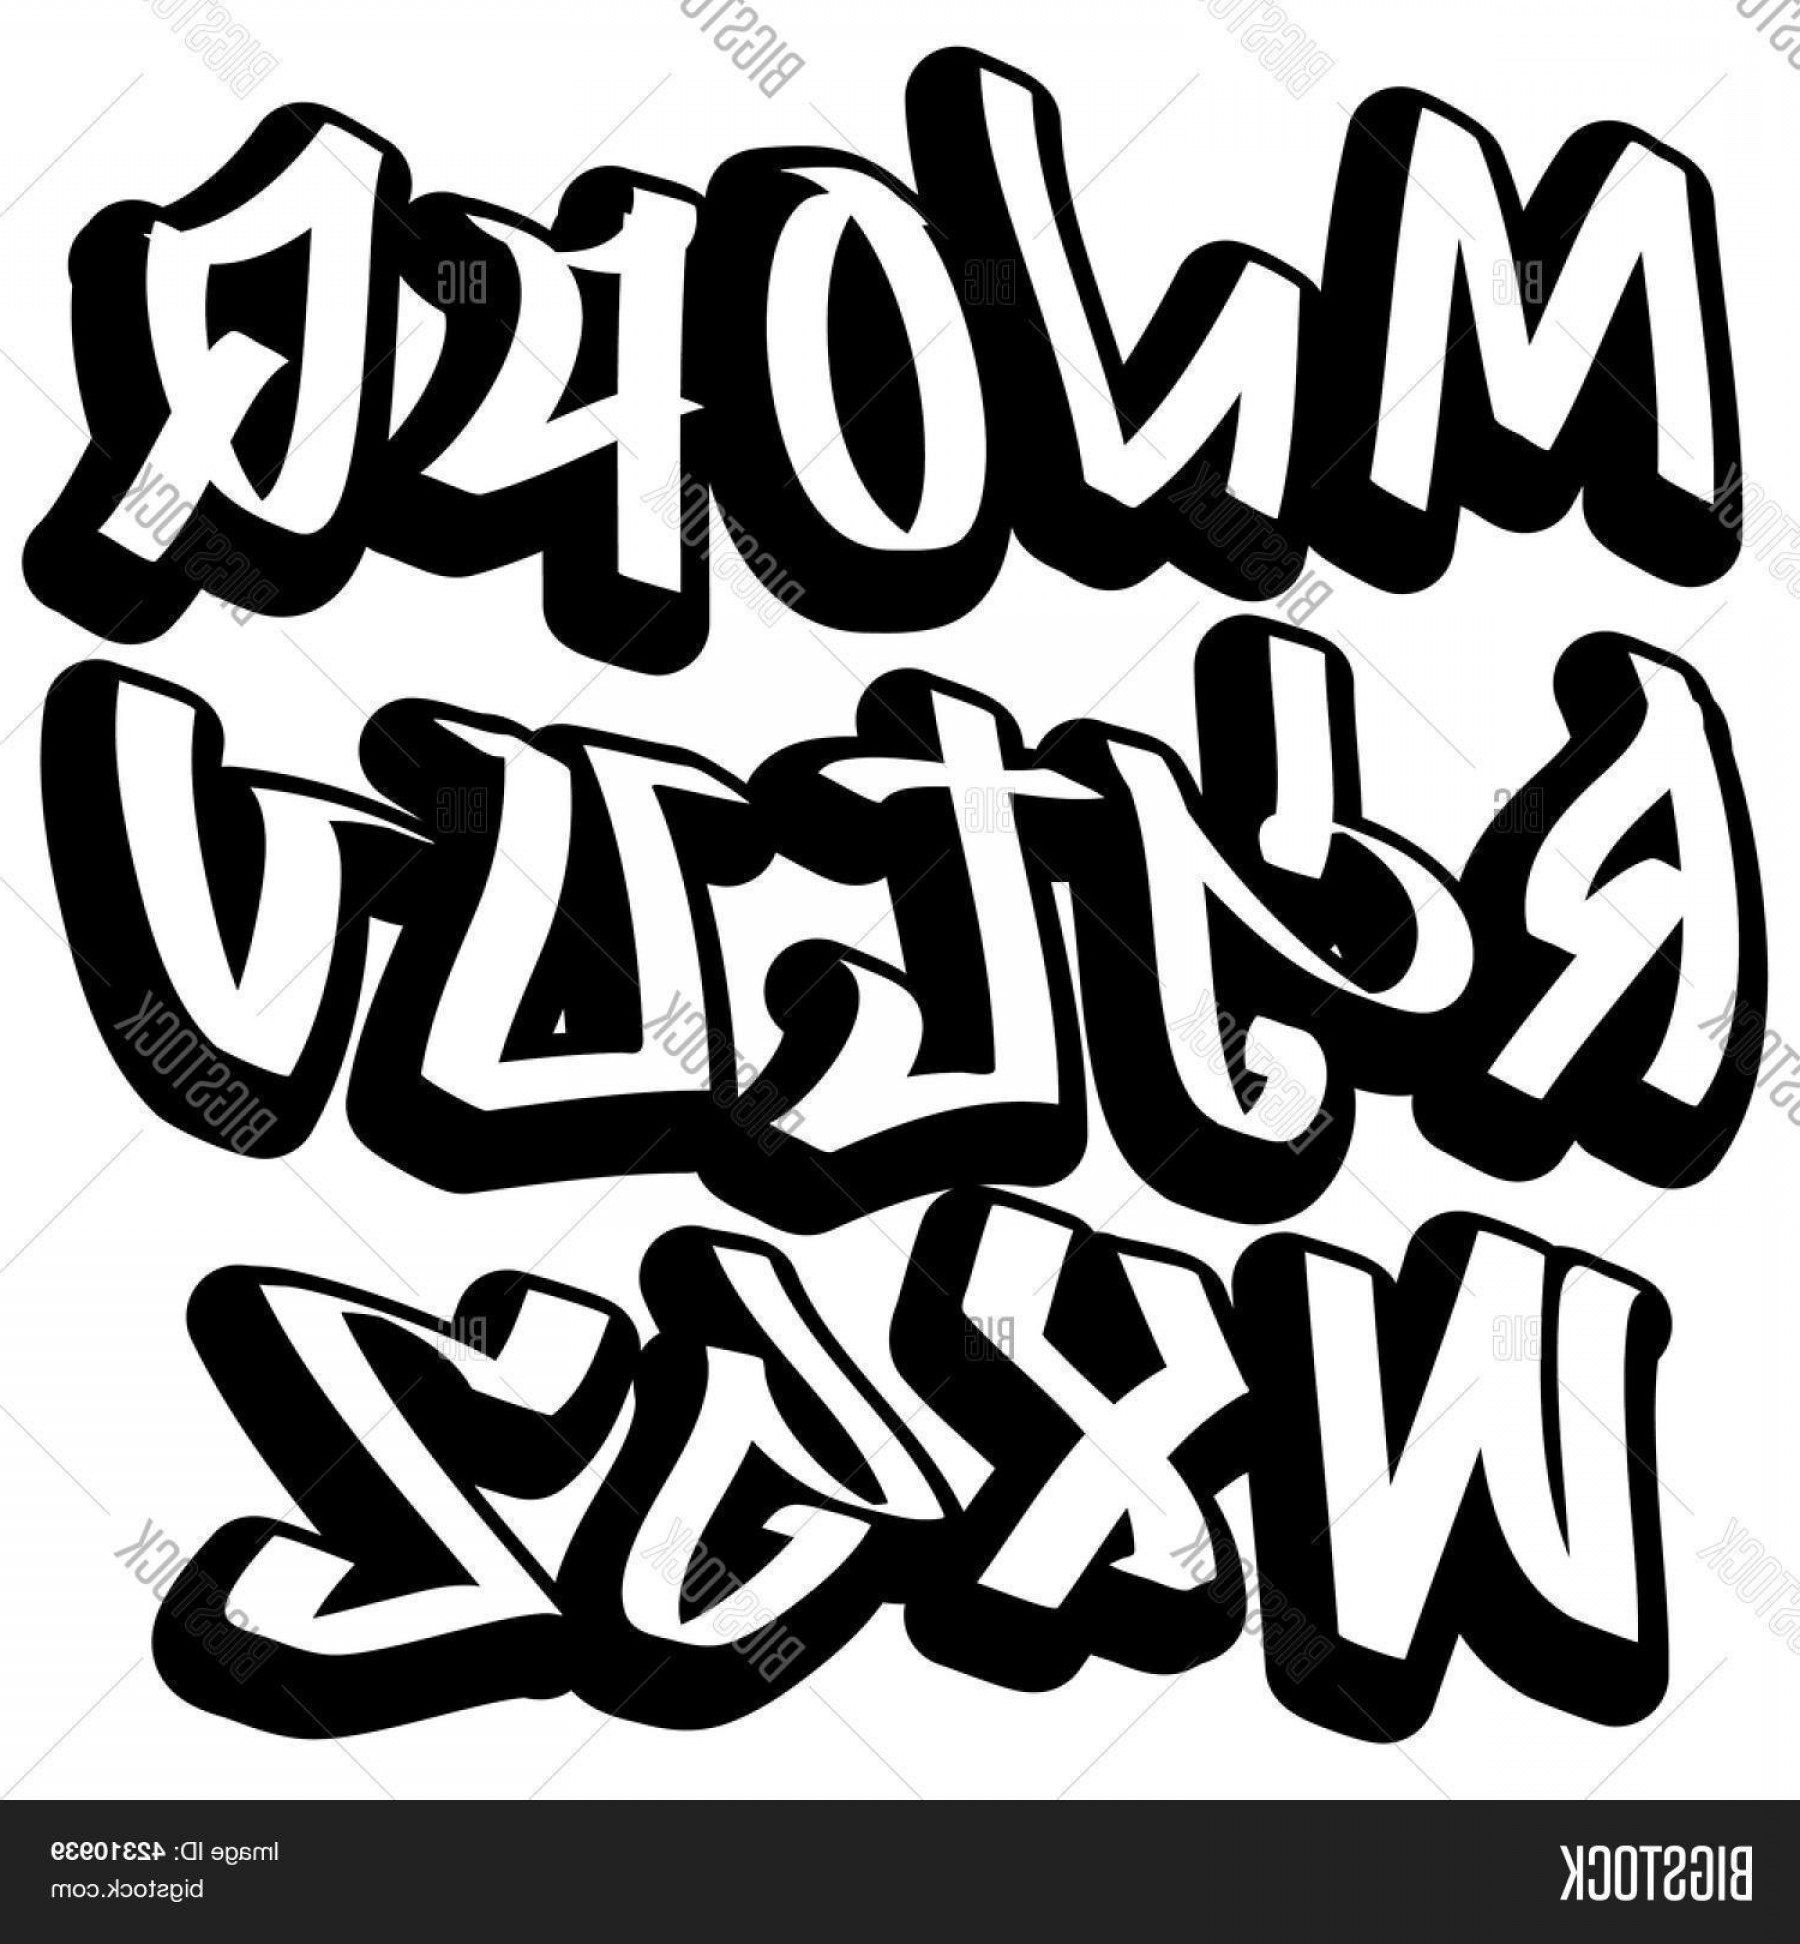 Vector Graffiti Font at Vectorified.com | Collection of Vector Graffiti ...